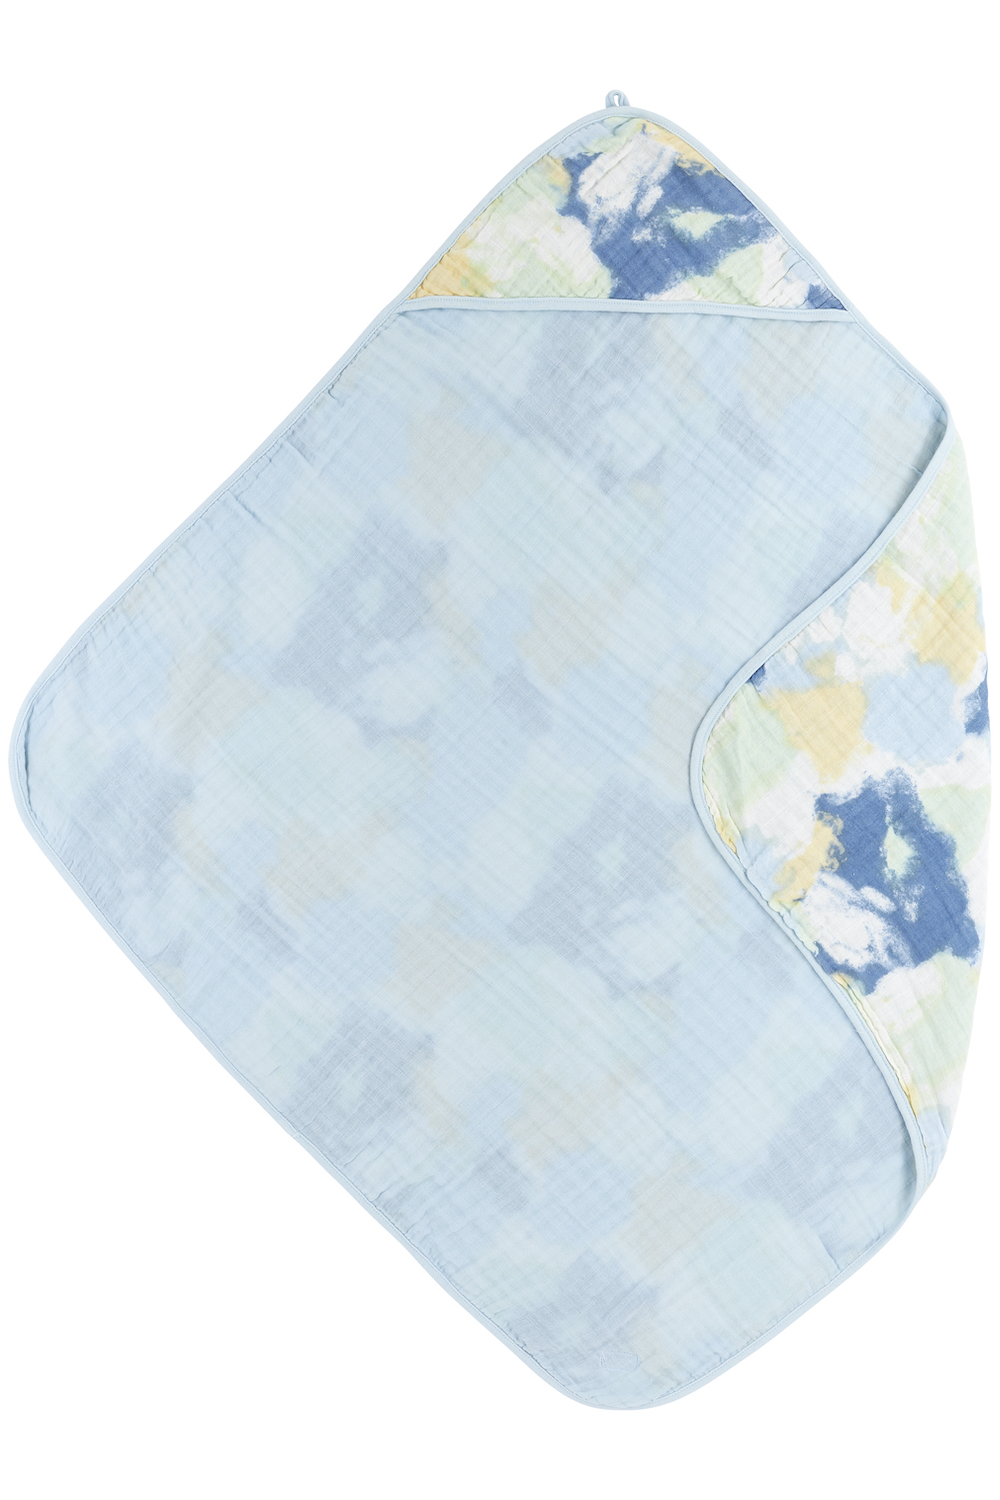 Bathcape muslin Tie-Dye - light blue - 80x80cm